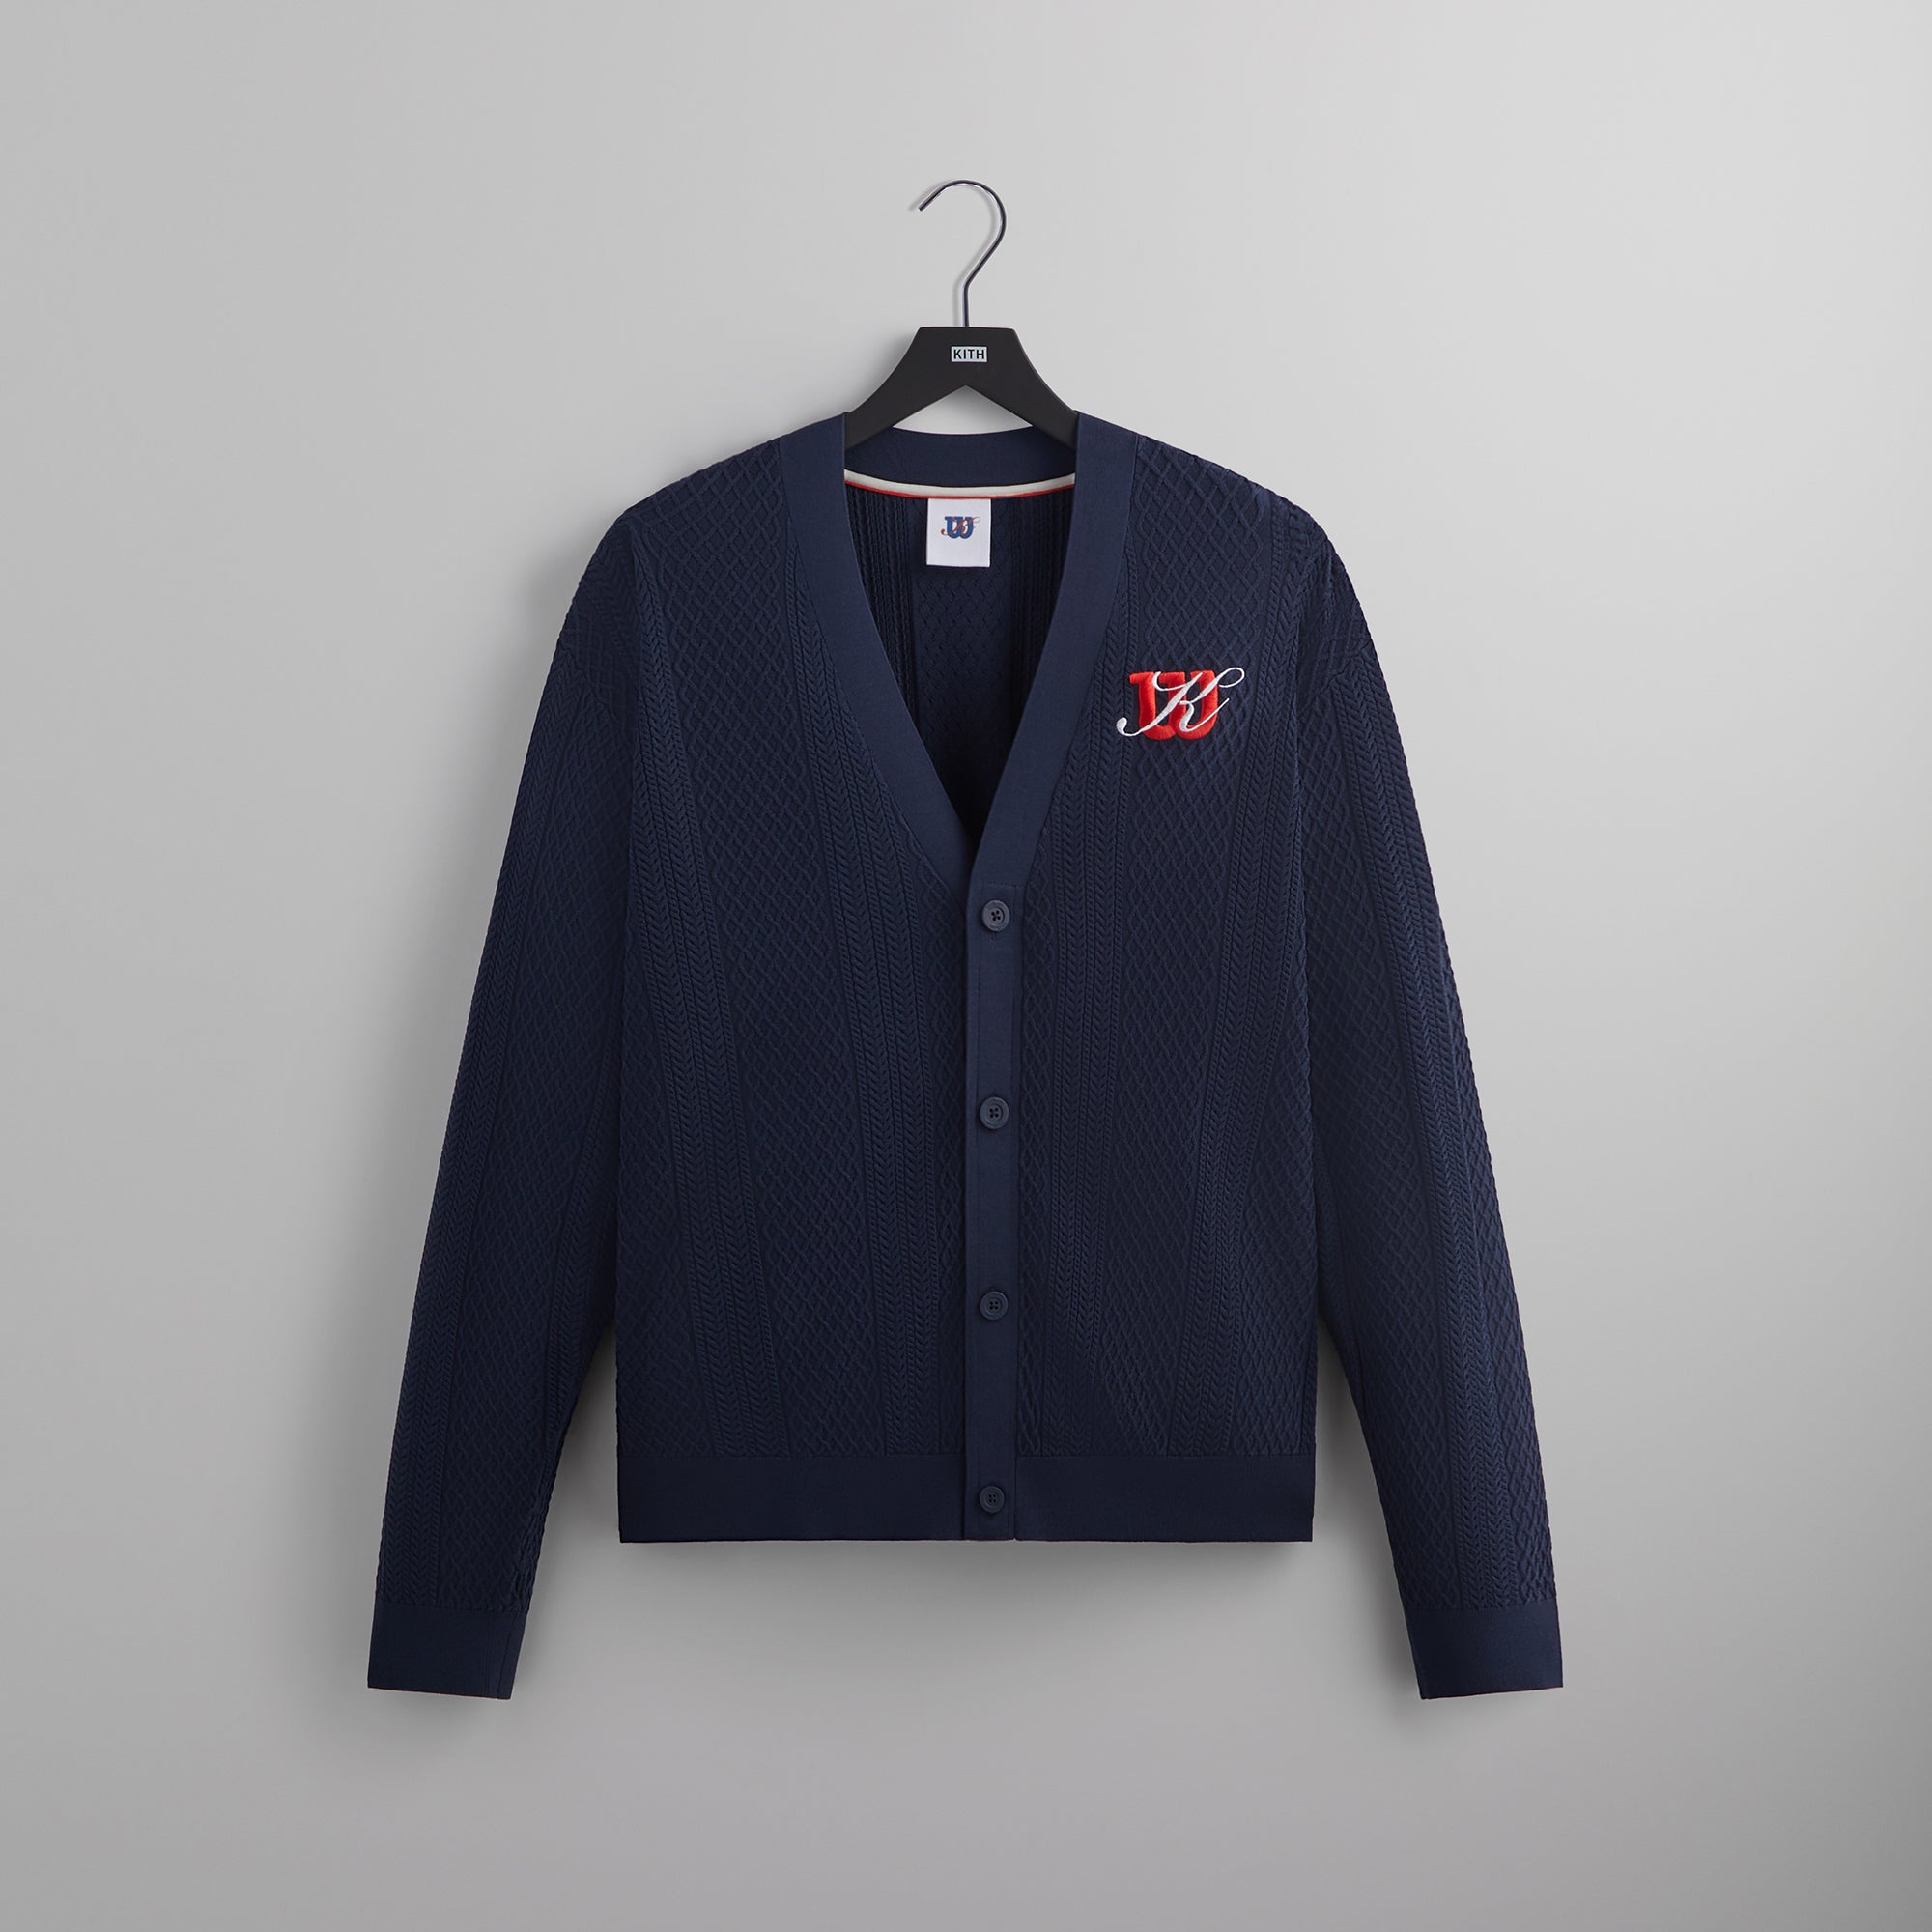 Kith for Wilson Sweater Cardigan - Navy Blazer